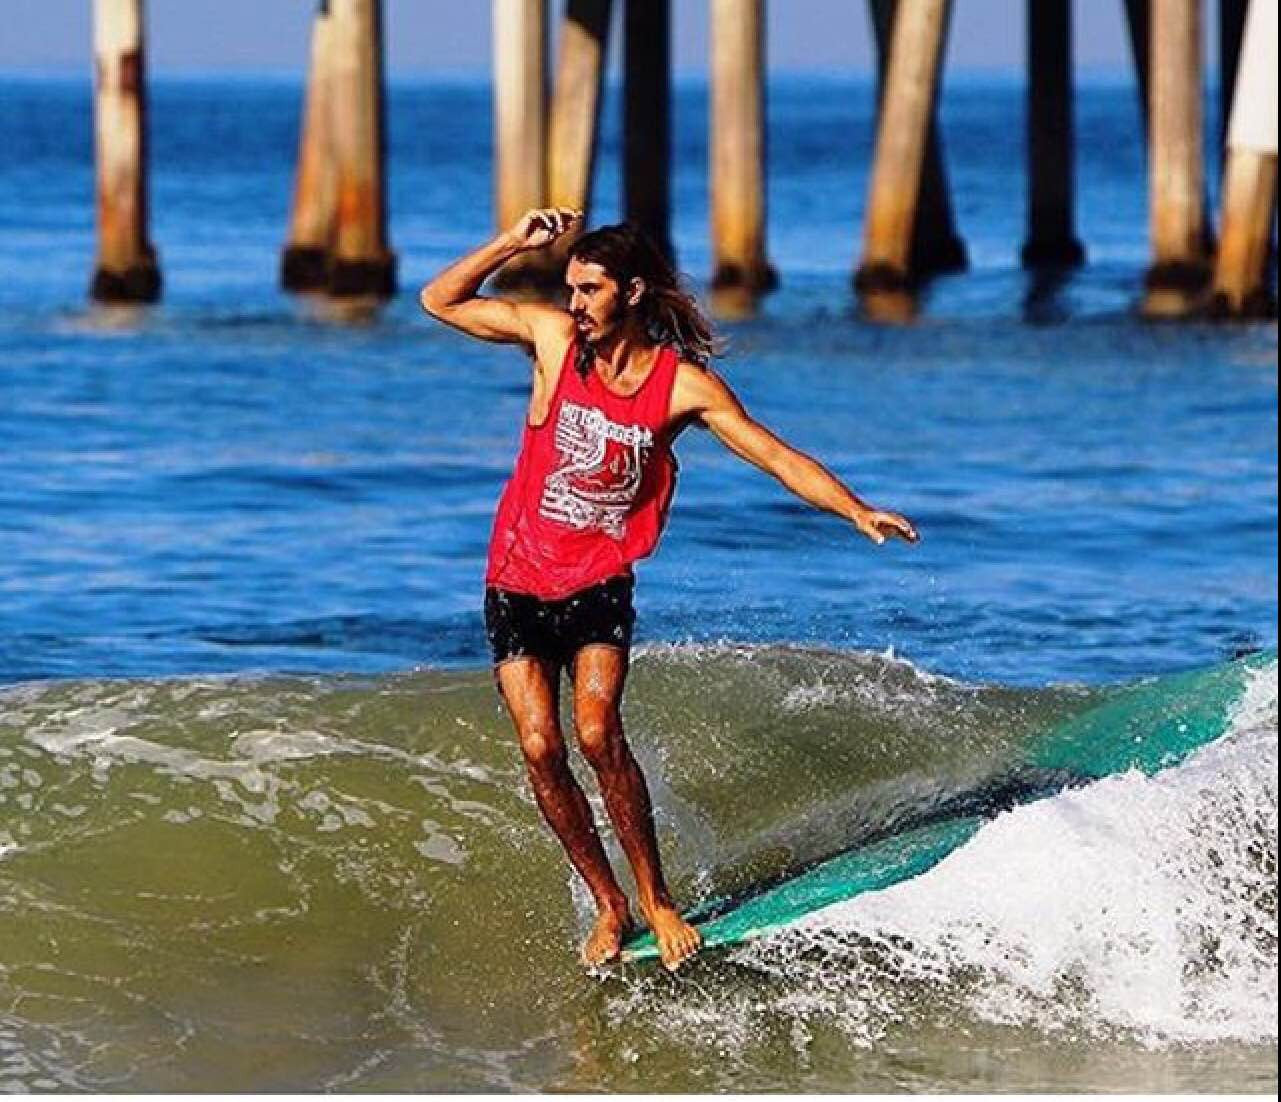 People Who Surf SanO: Q & A with Andy Nieblas